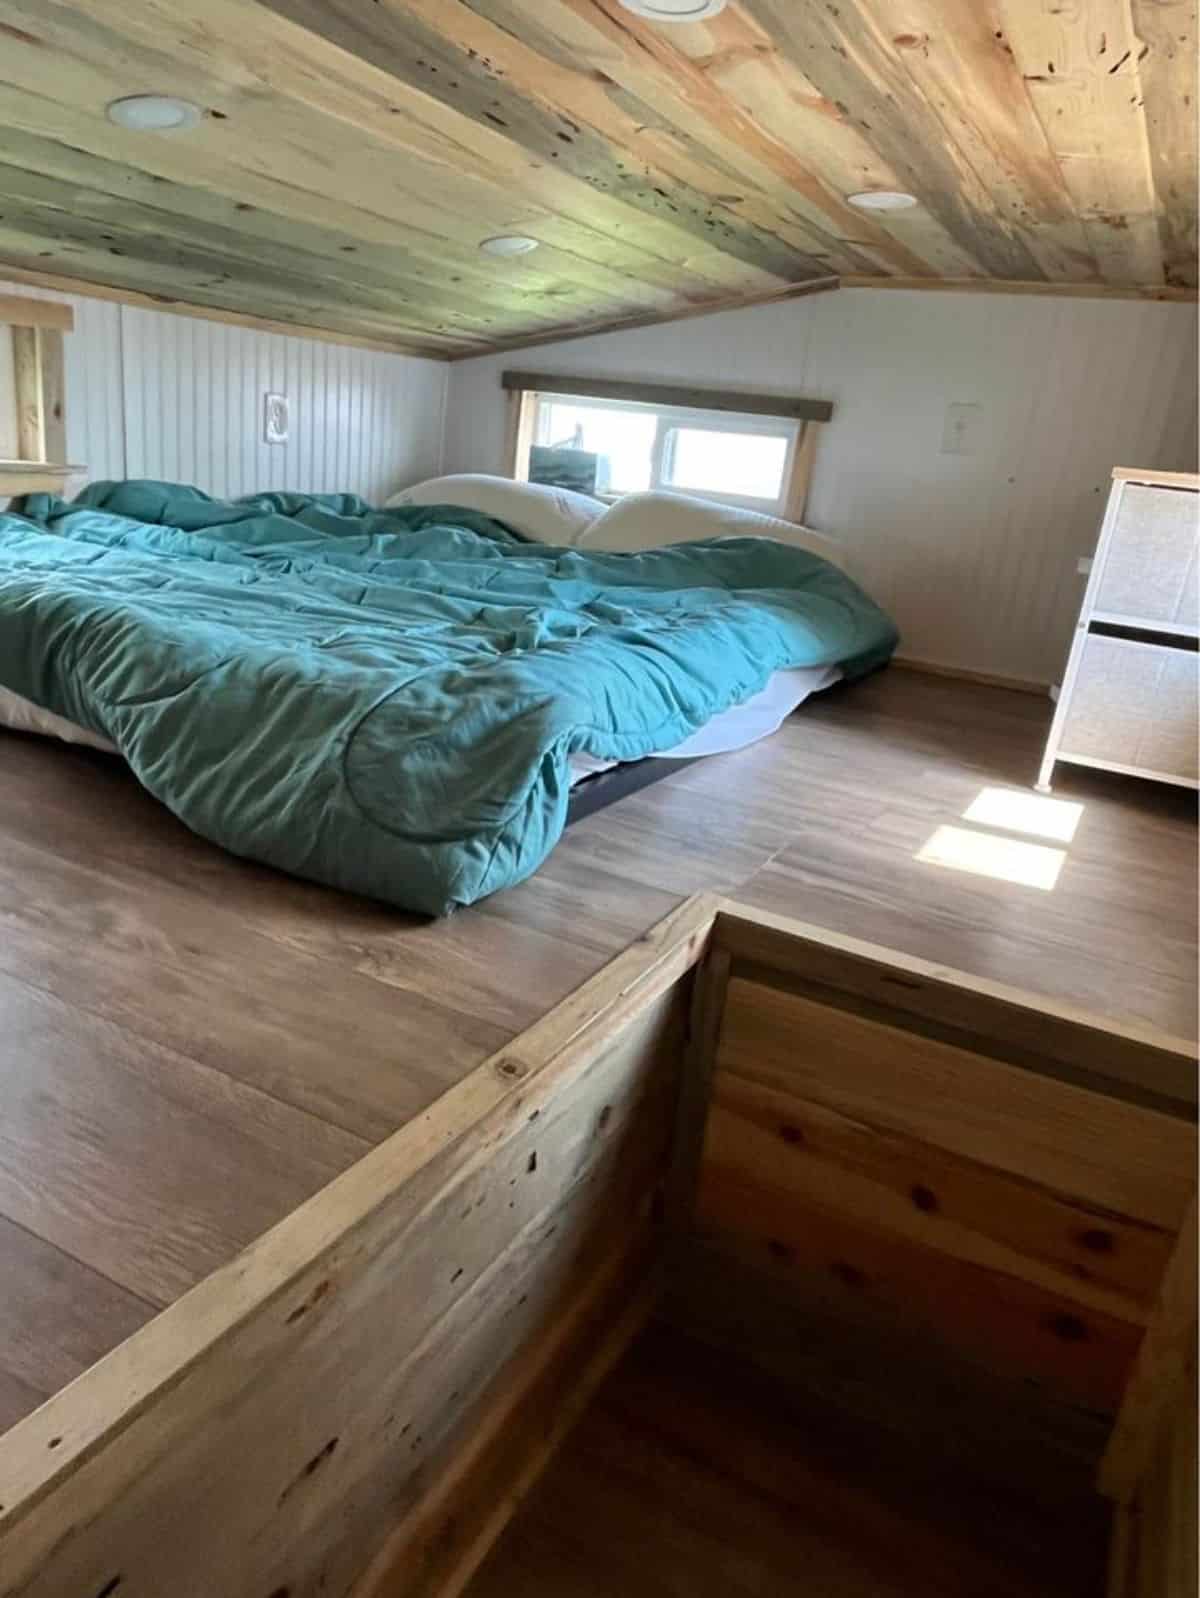 Loft bedroom is quite spacious